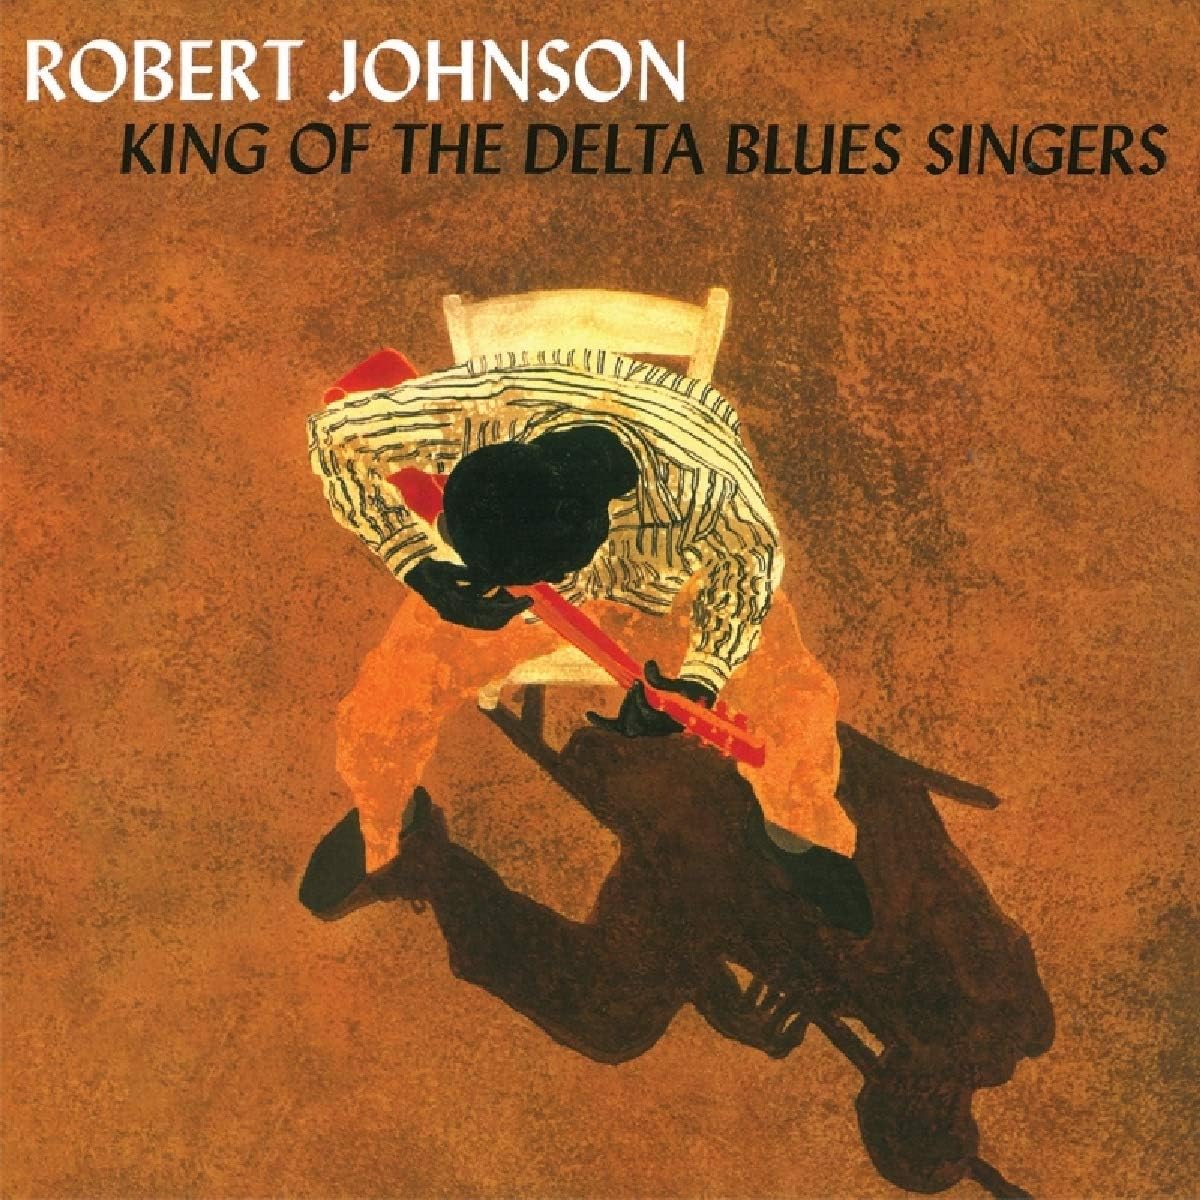 Robert Johnson King of the Delta Blues